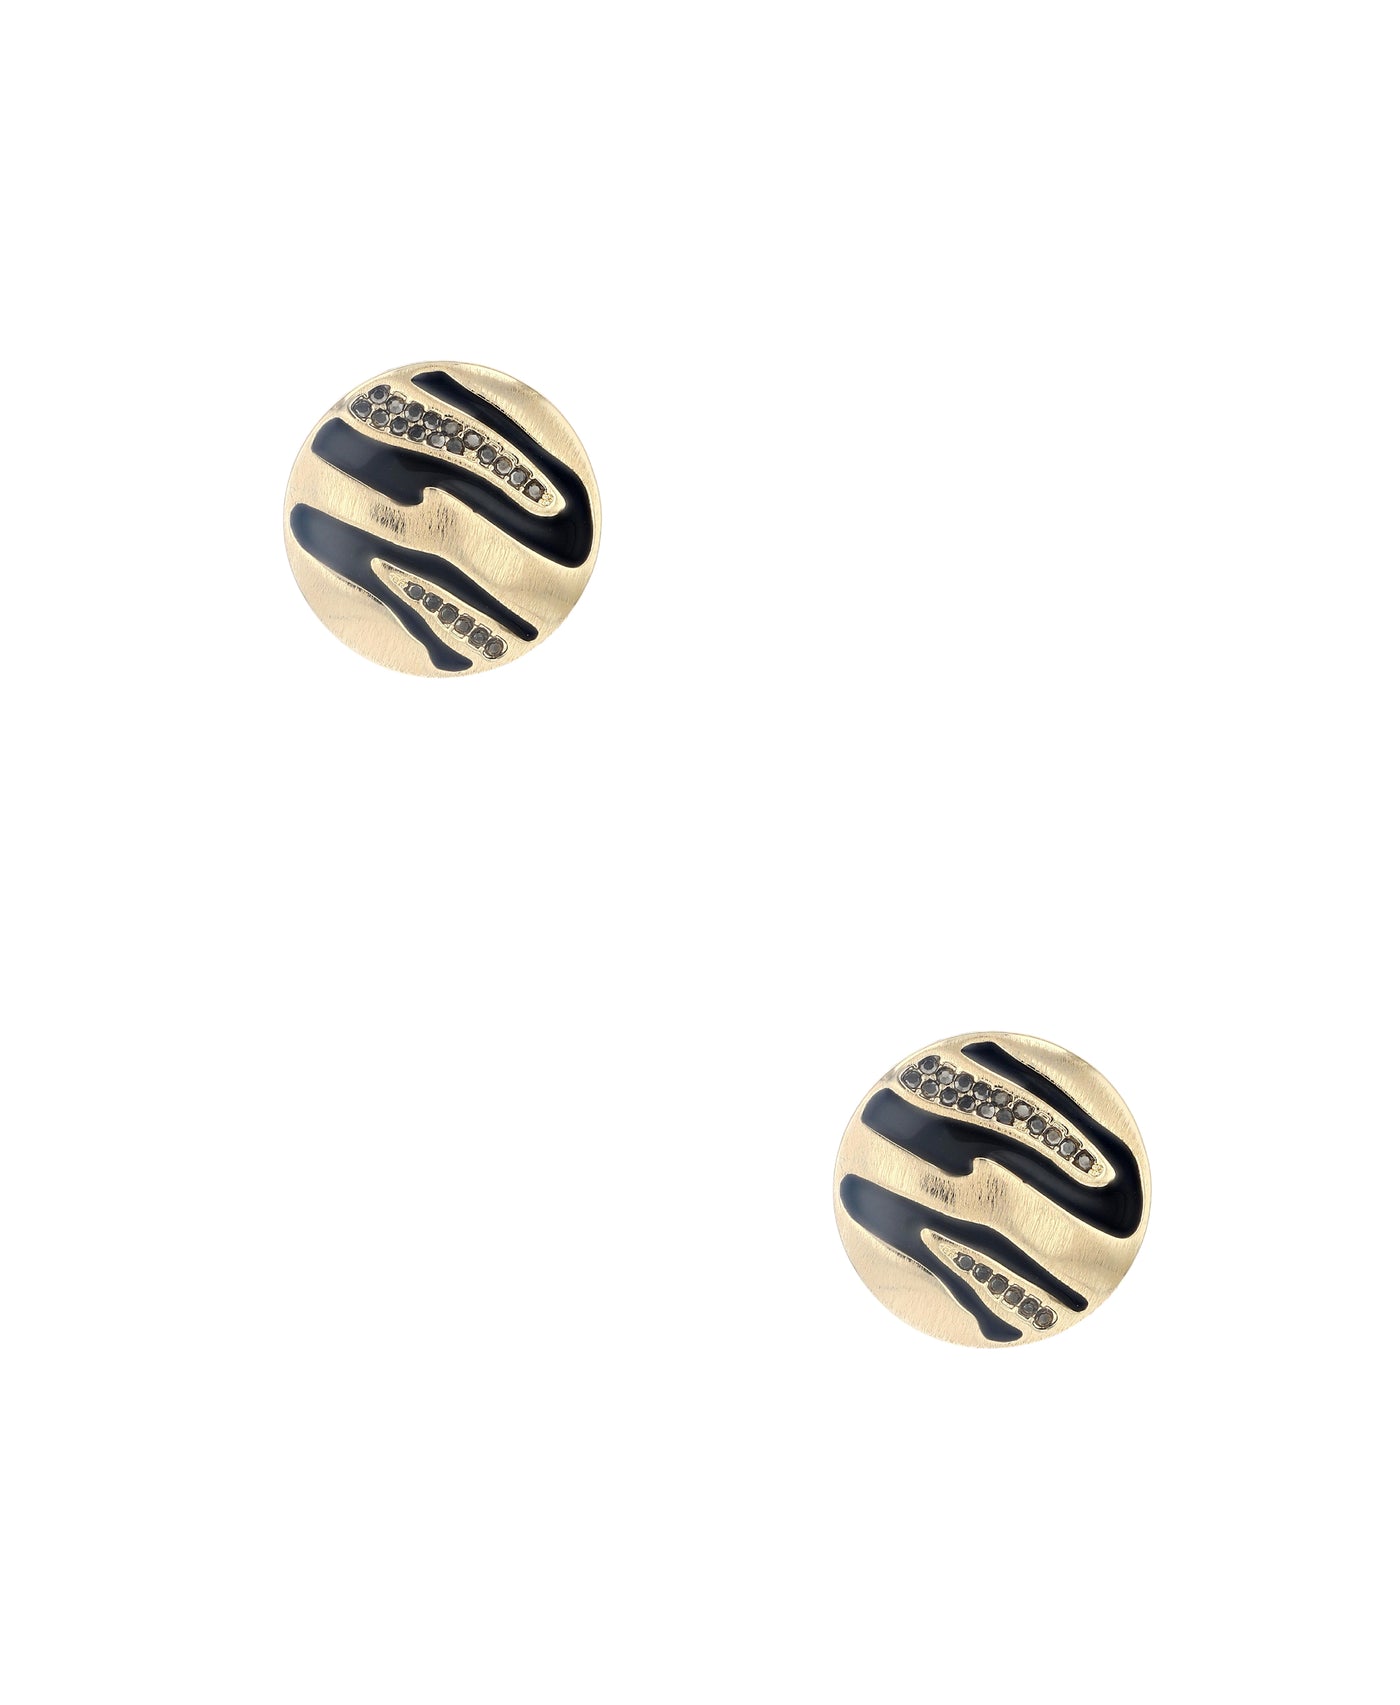 Clip On Disk Earrings w/ Rhinestones image 1